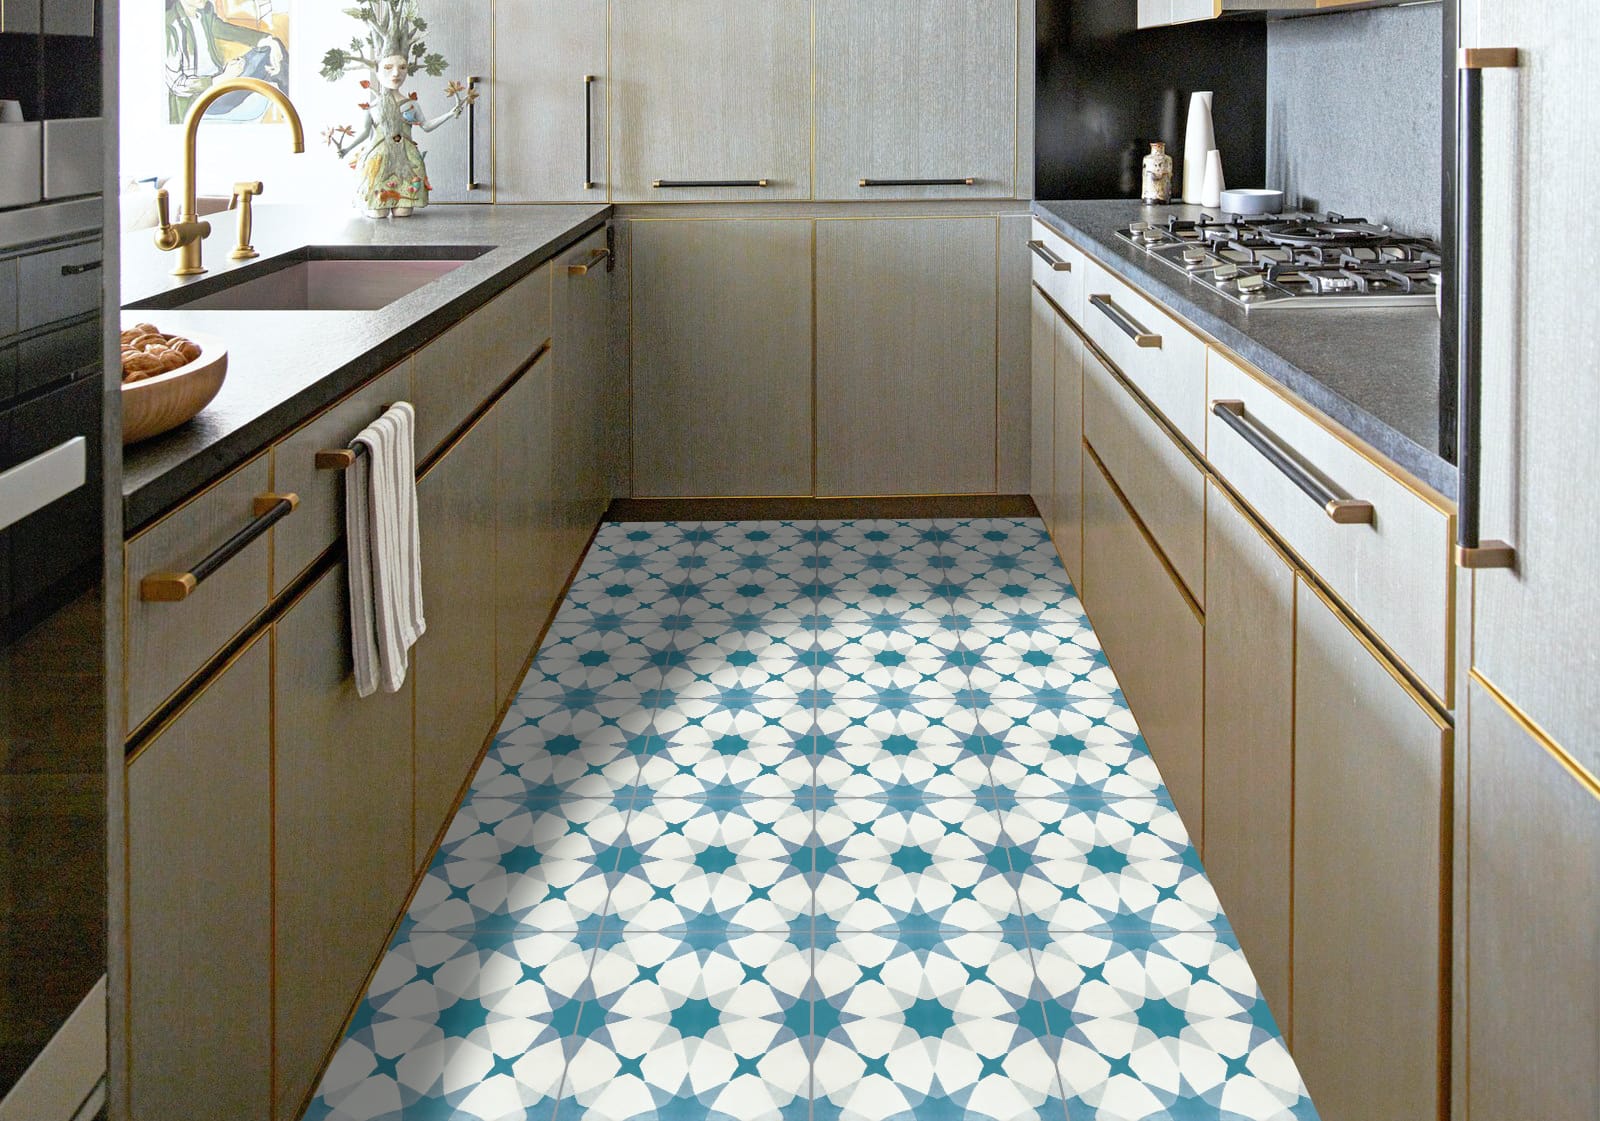 Moroccan Cement tile on kitchen floor